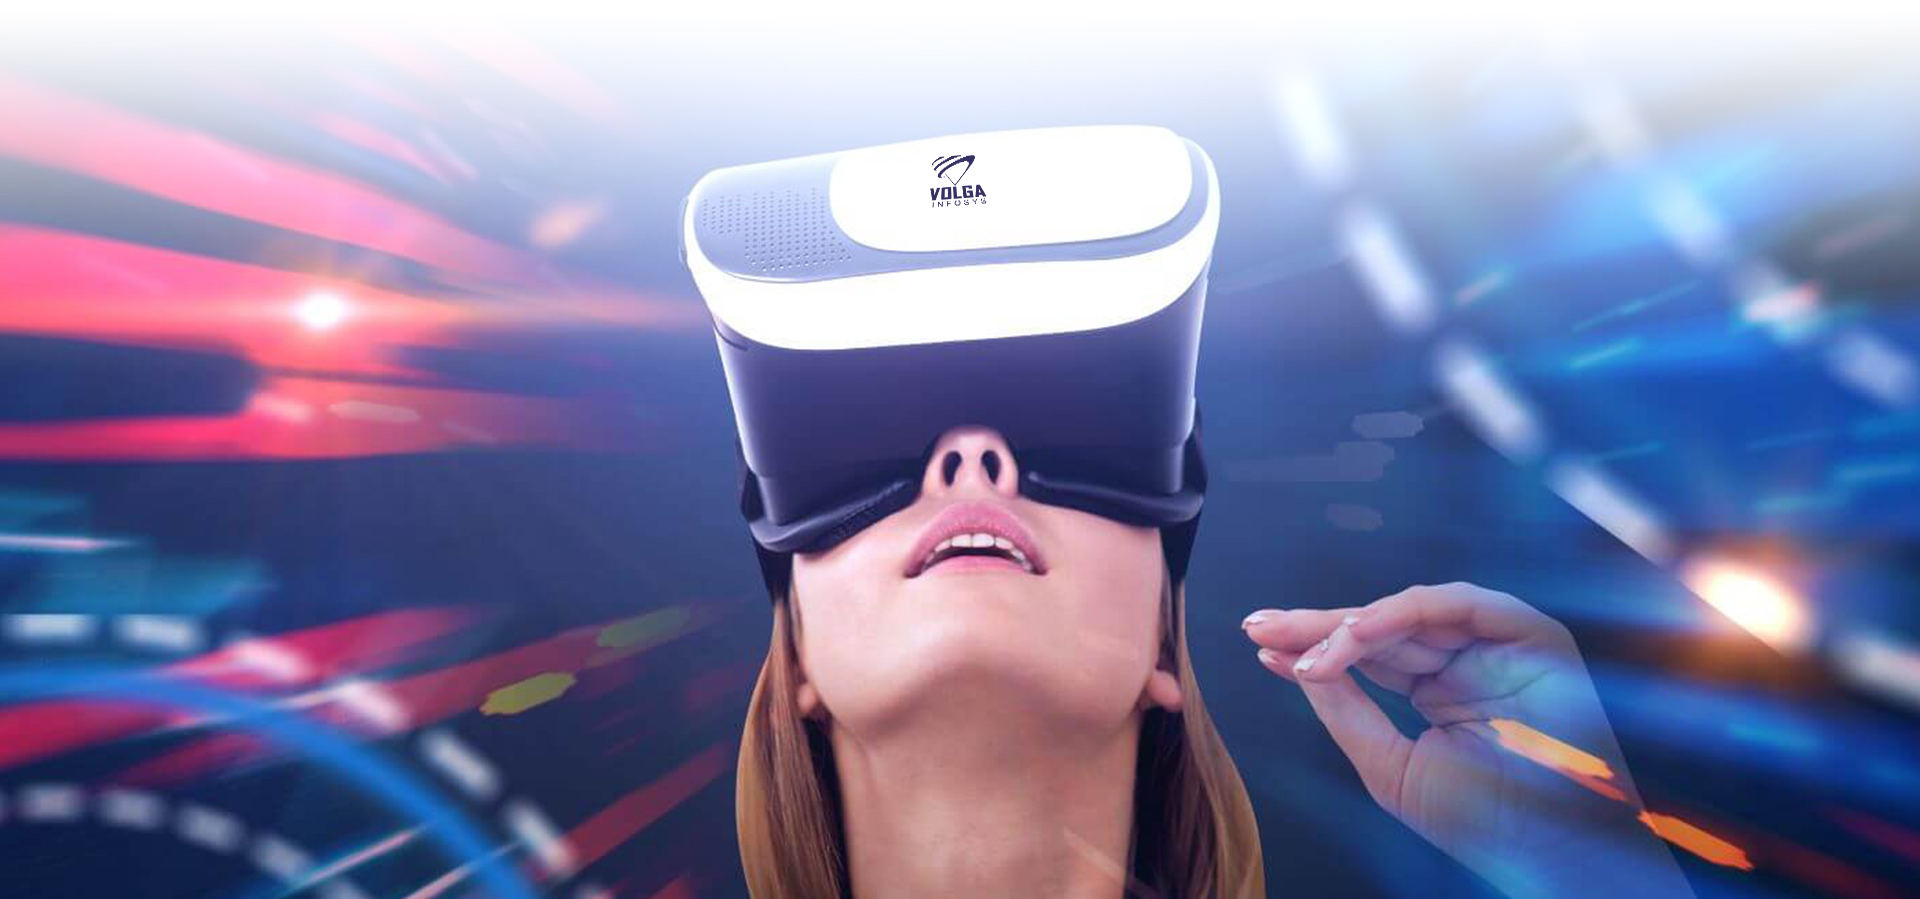 Real Life Applications of Virtual Reality